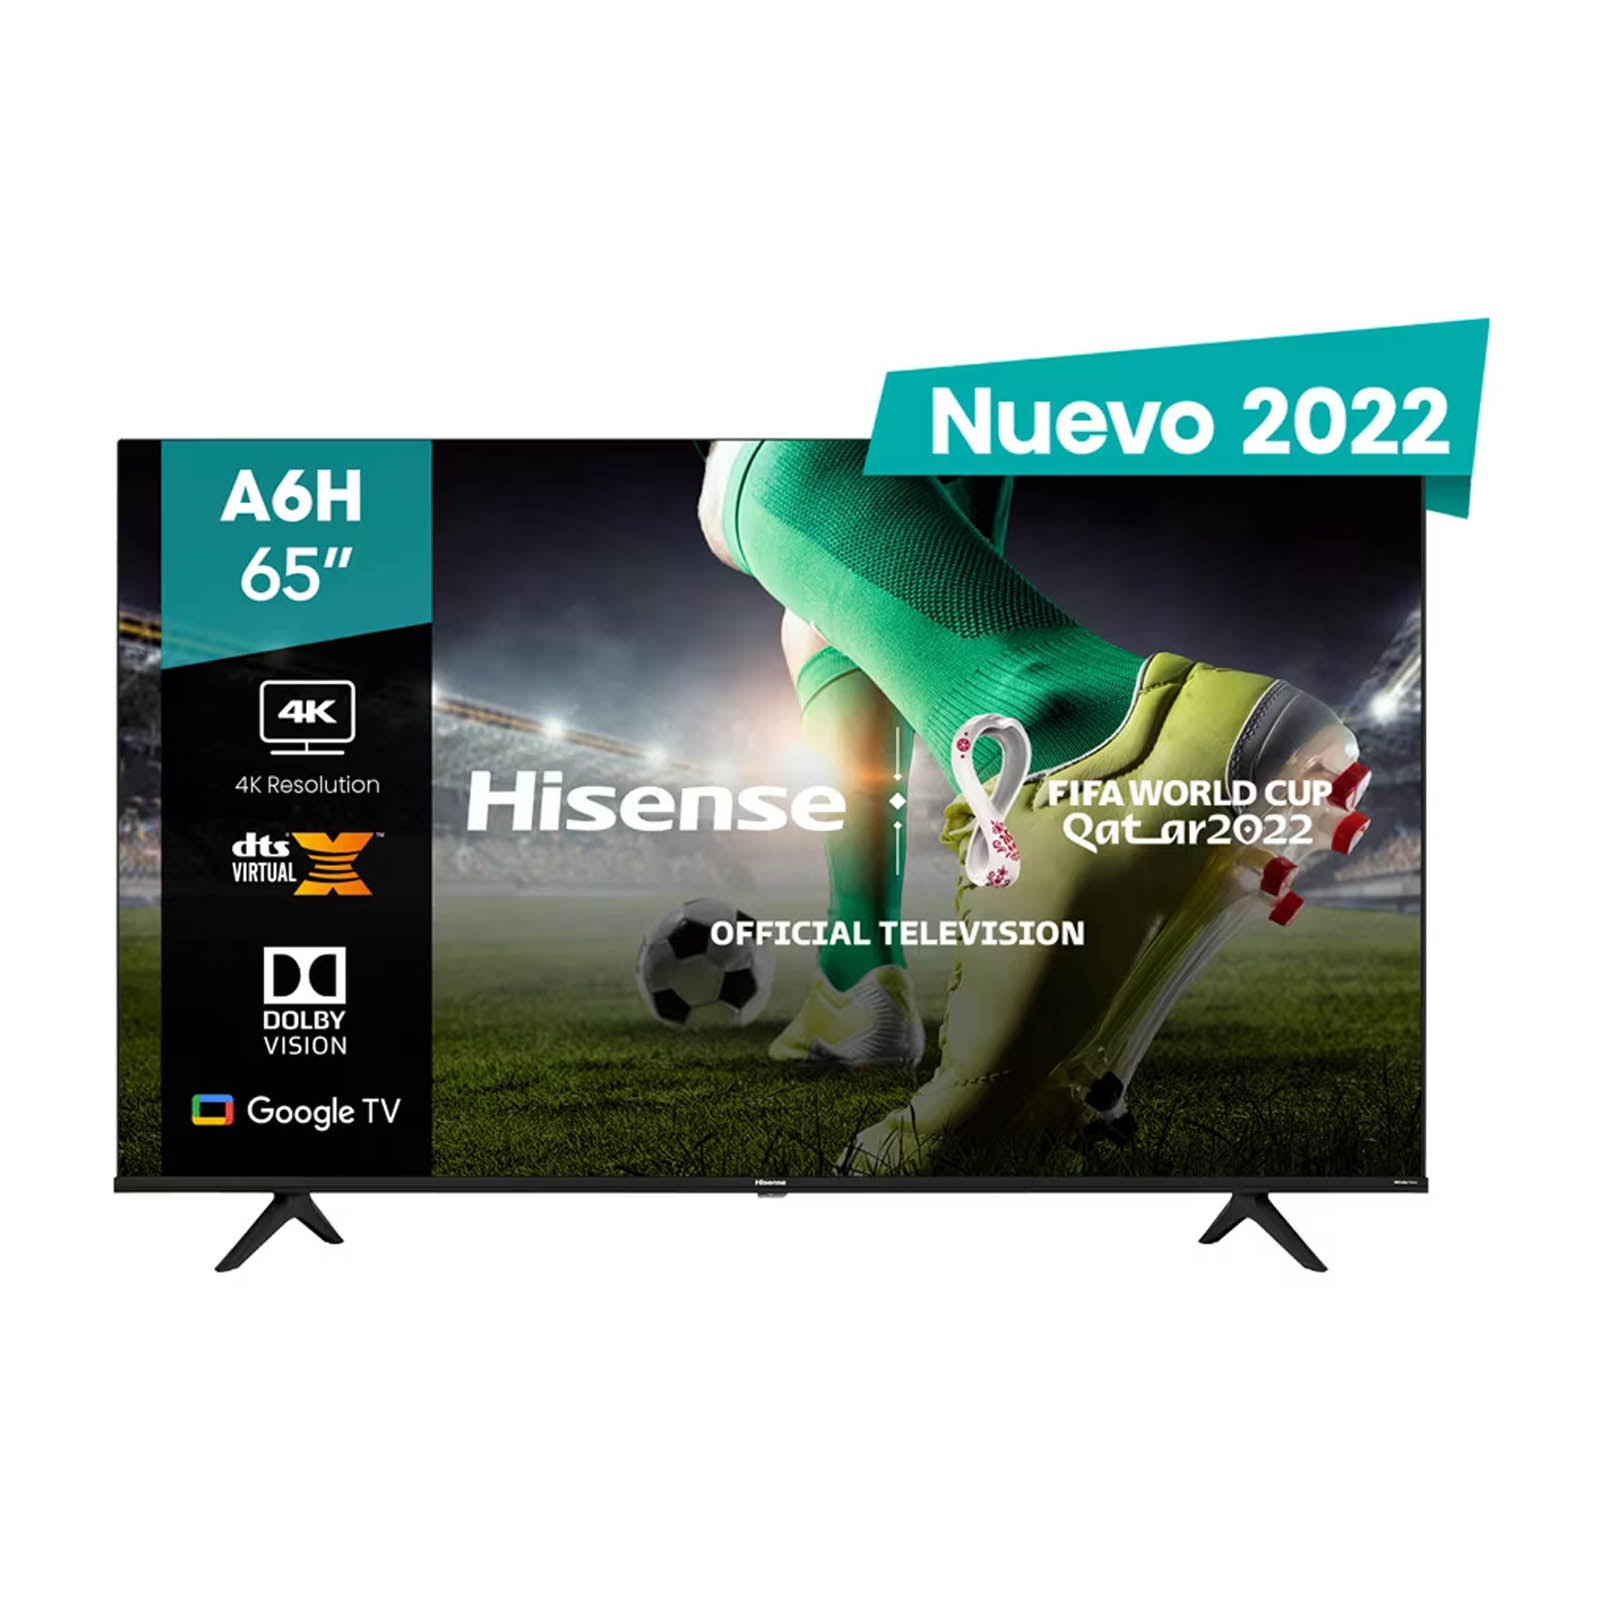 Pantalla Smart TV Hisense LED de 65 pulgadas 4K/UHD 65A65K con Google TV